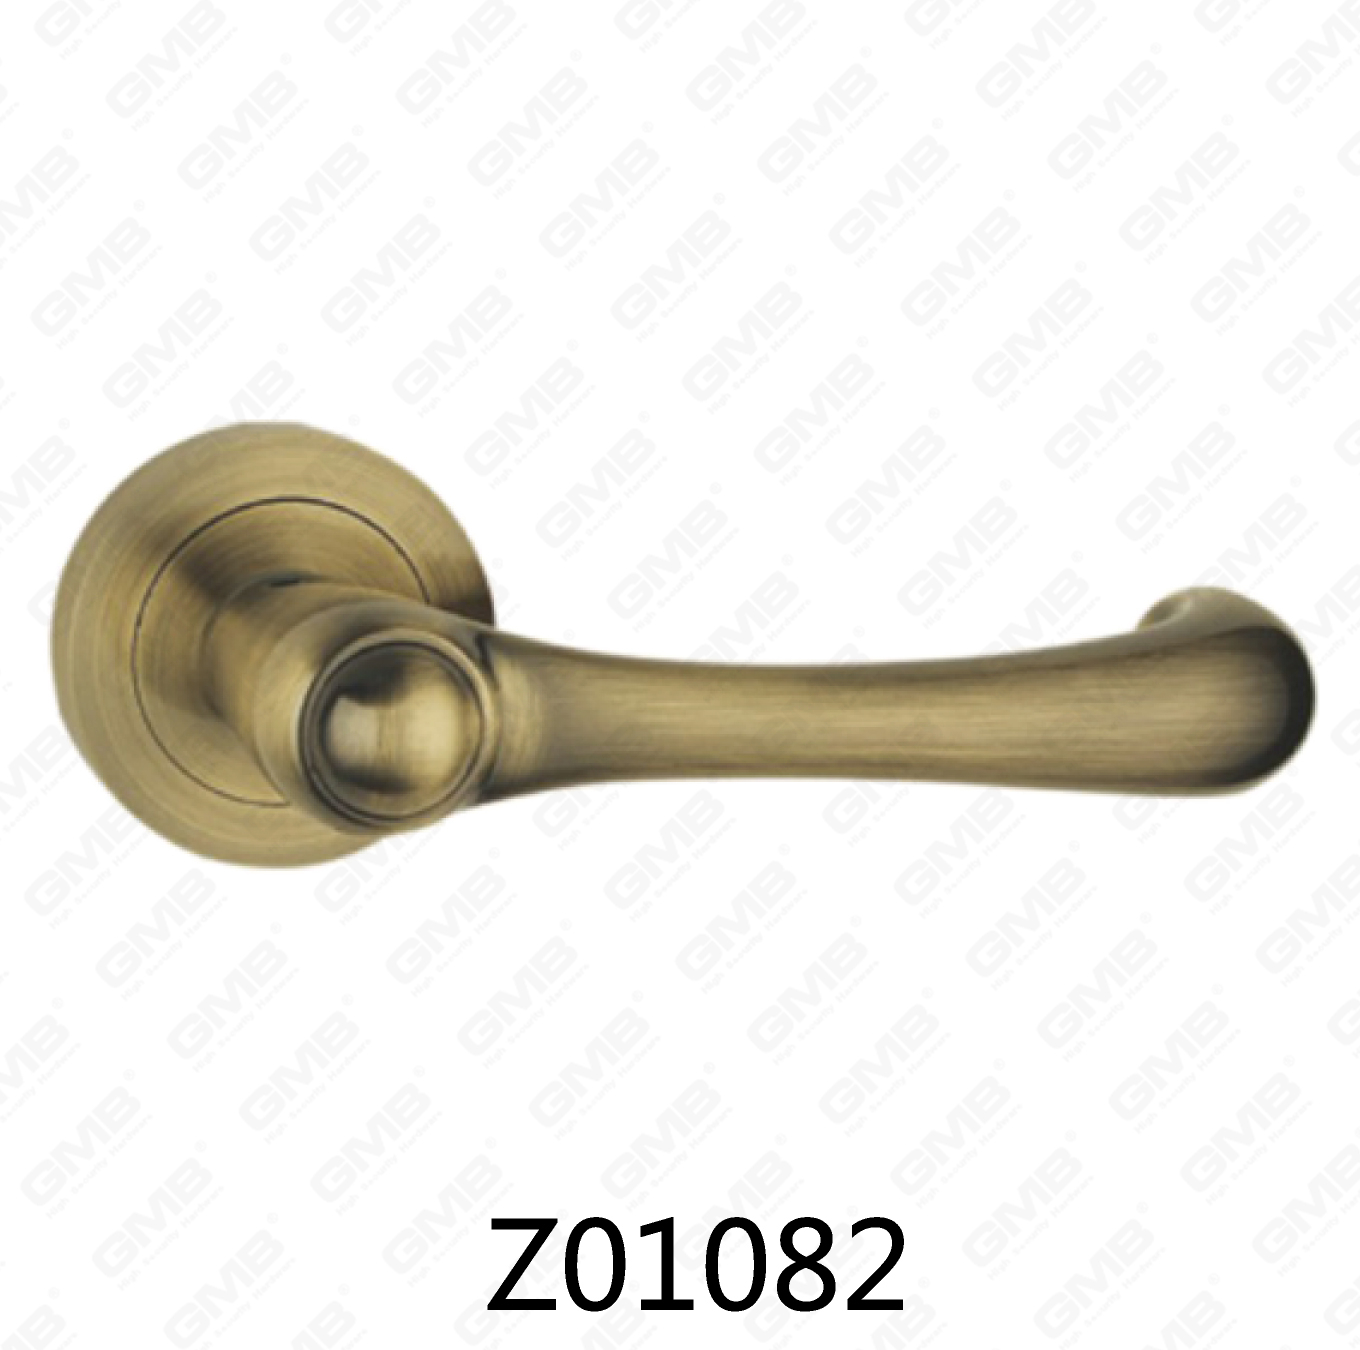 Manija de puerta de roseta de aluminio de aleación de zinc Zamak con roseta redonda (Z01082)